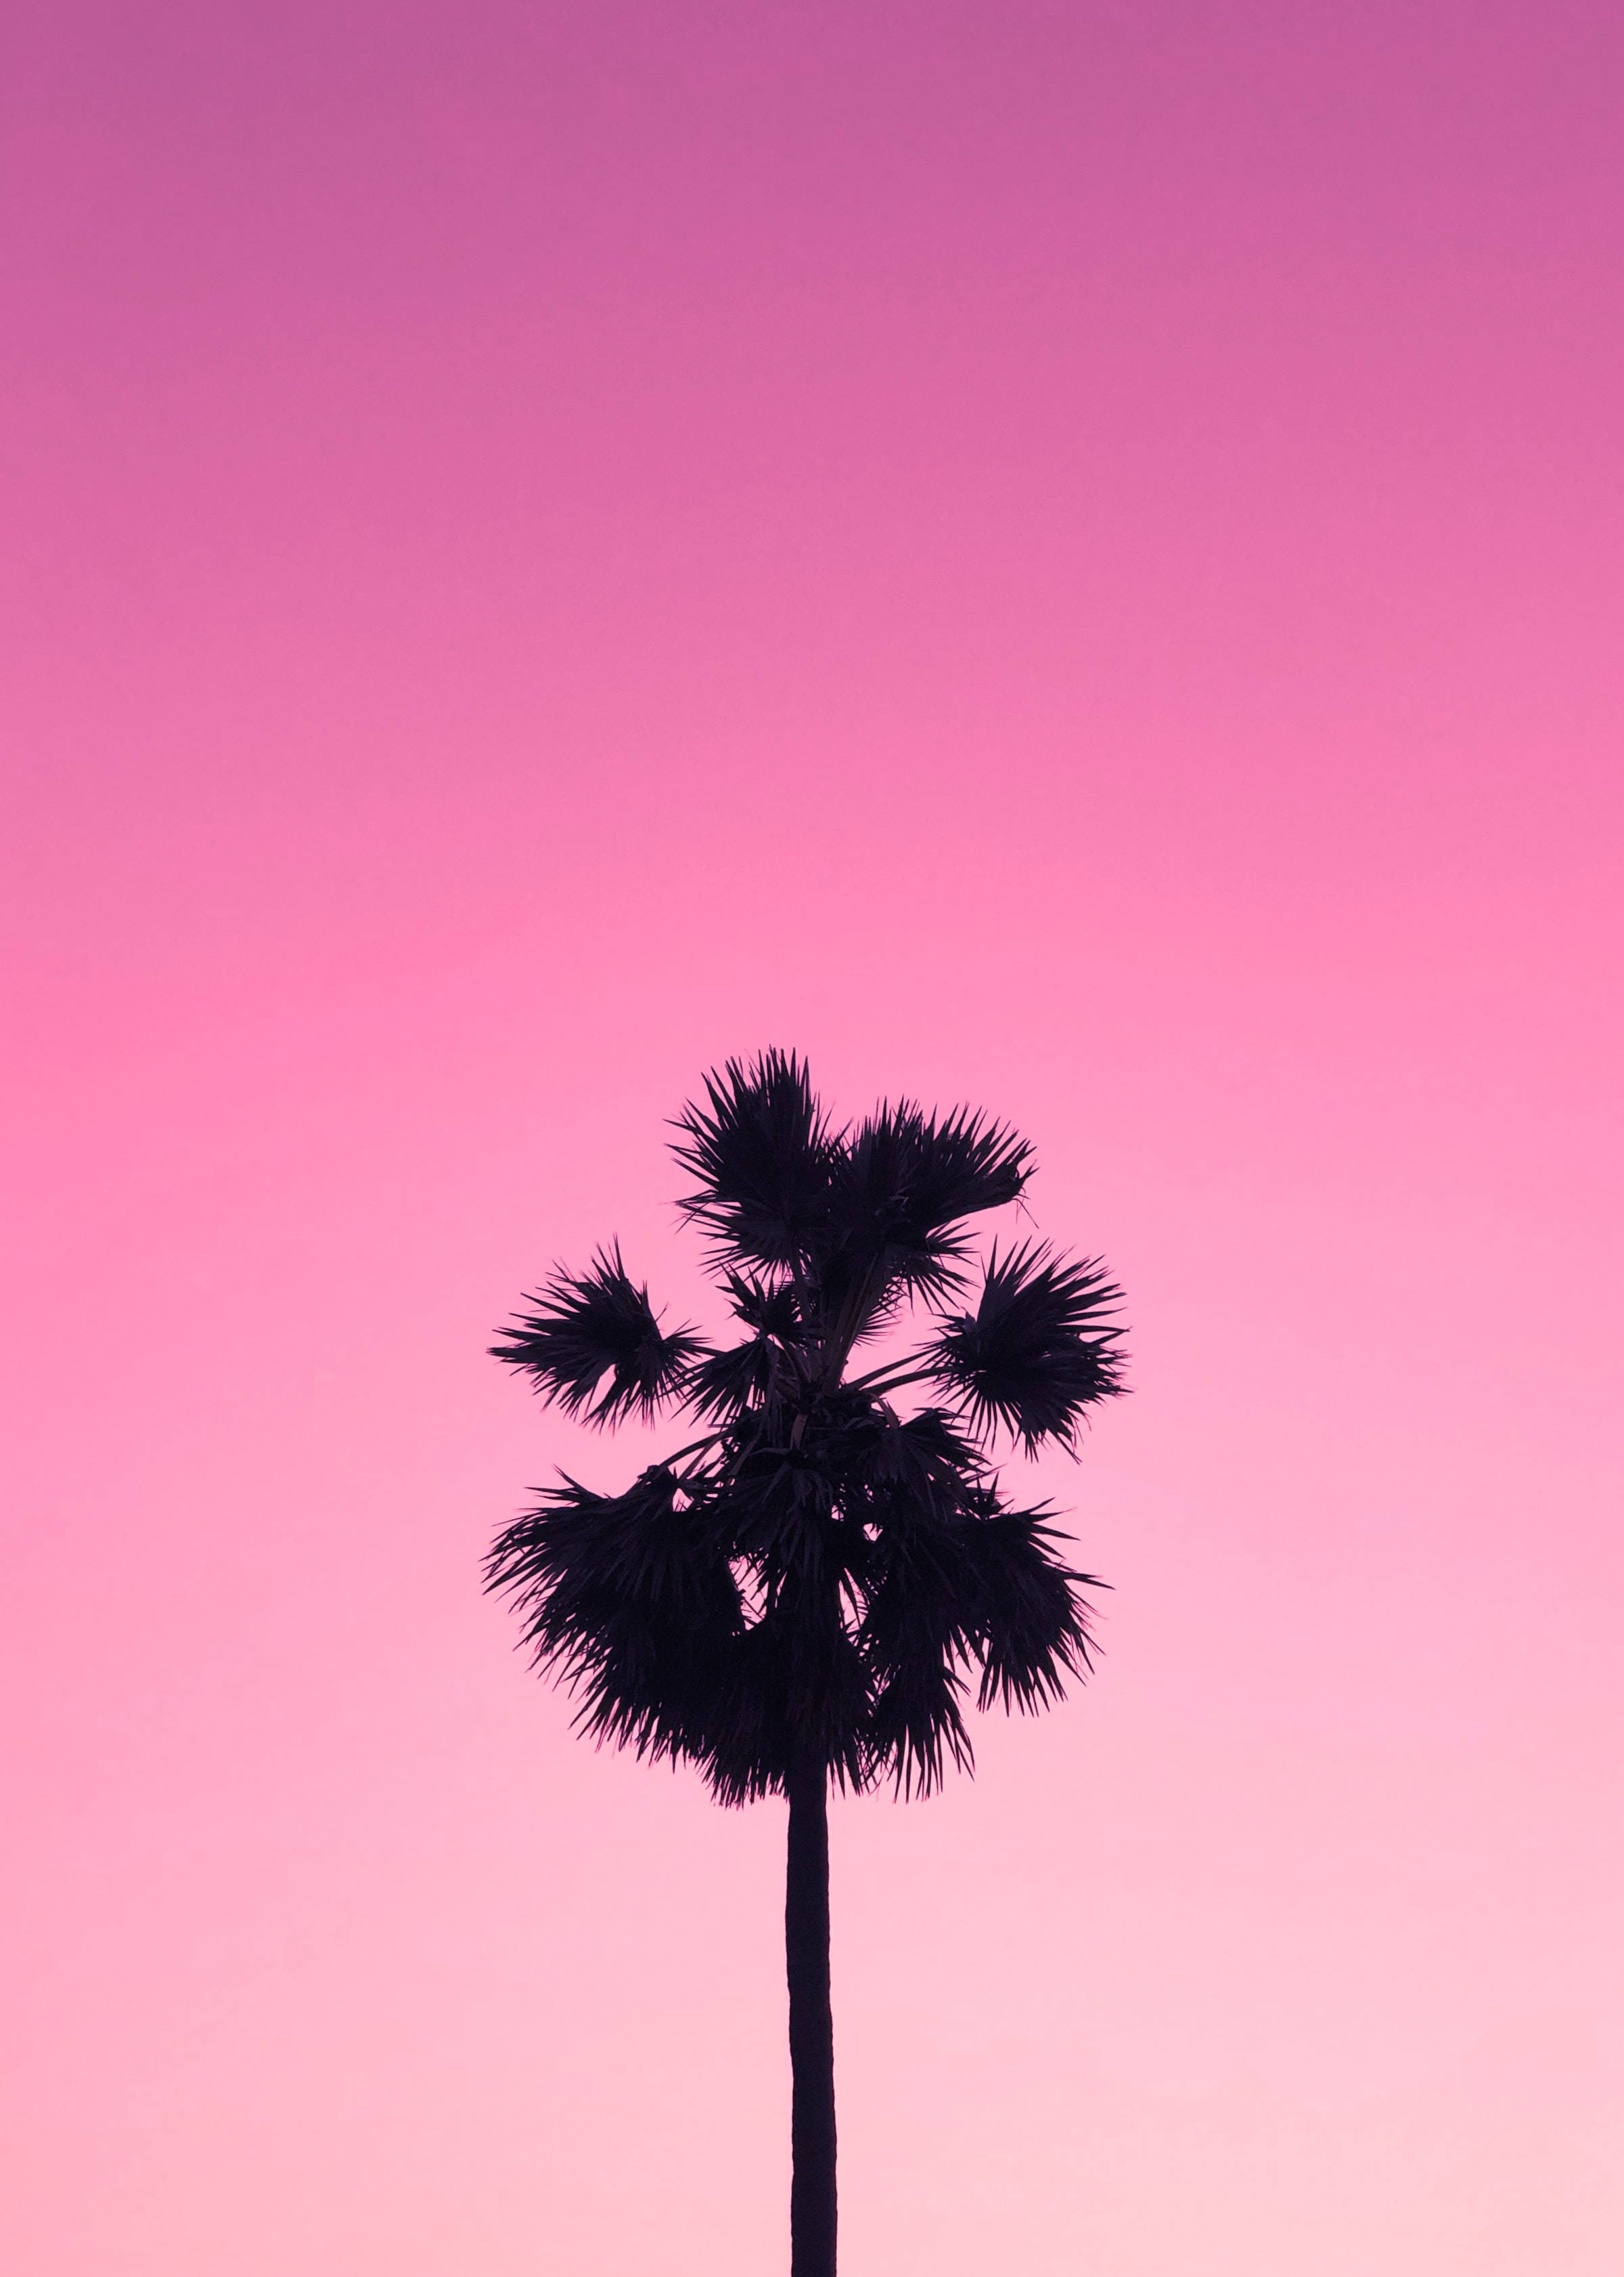 Cute Pink Aesthetic Sky Tree Silhouette